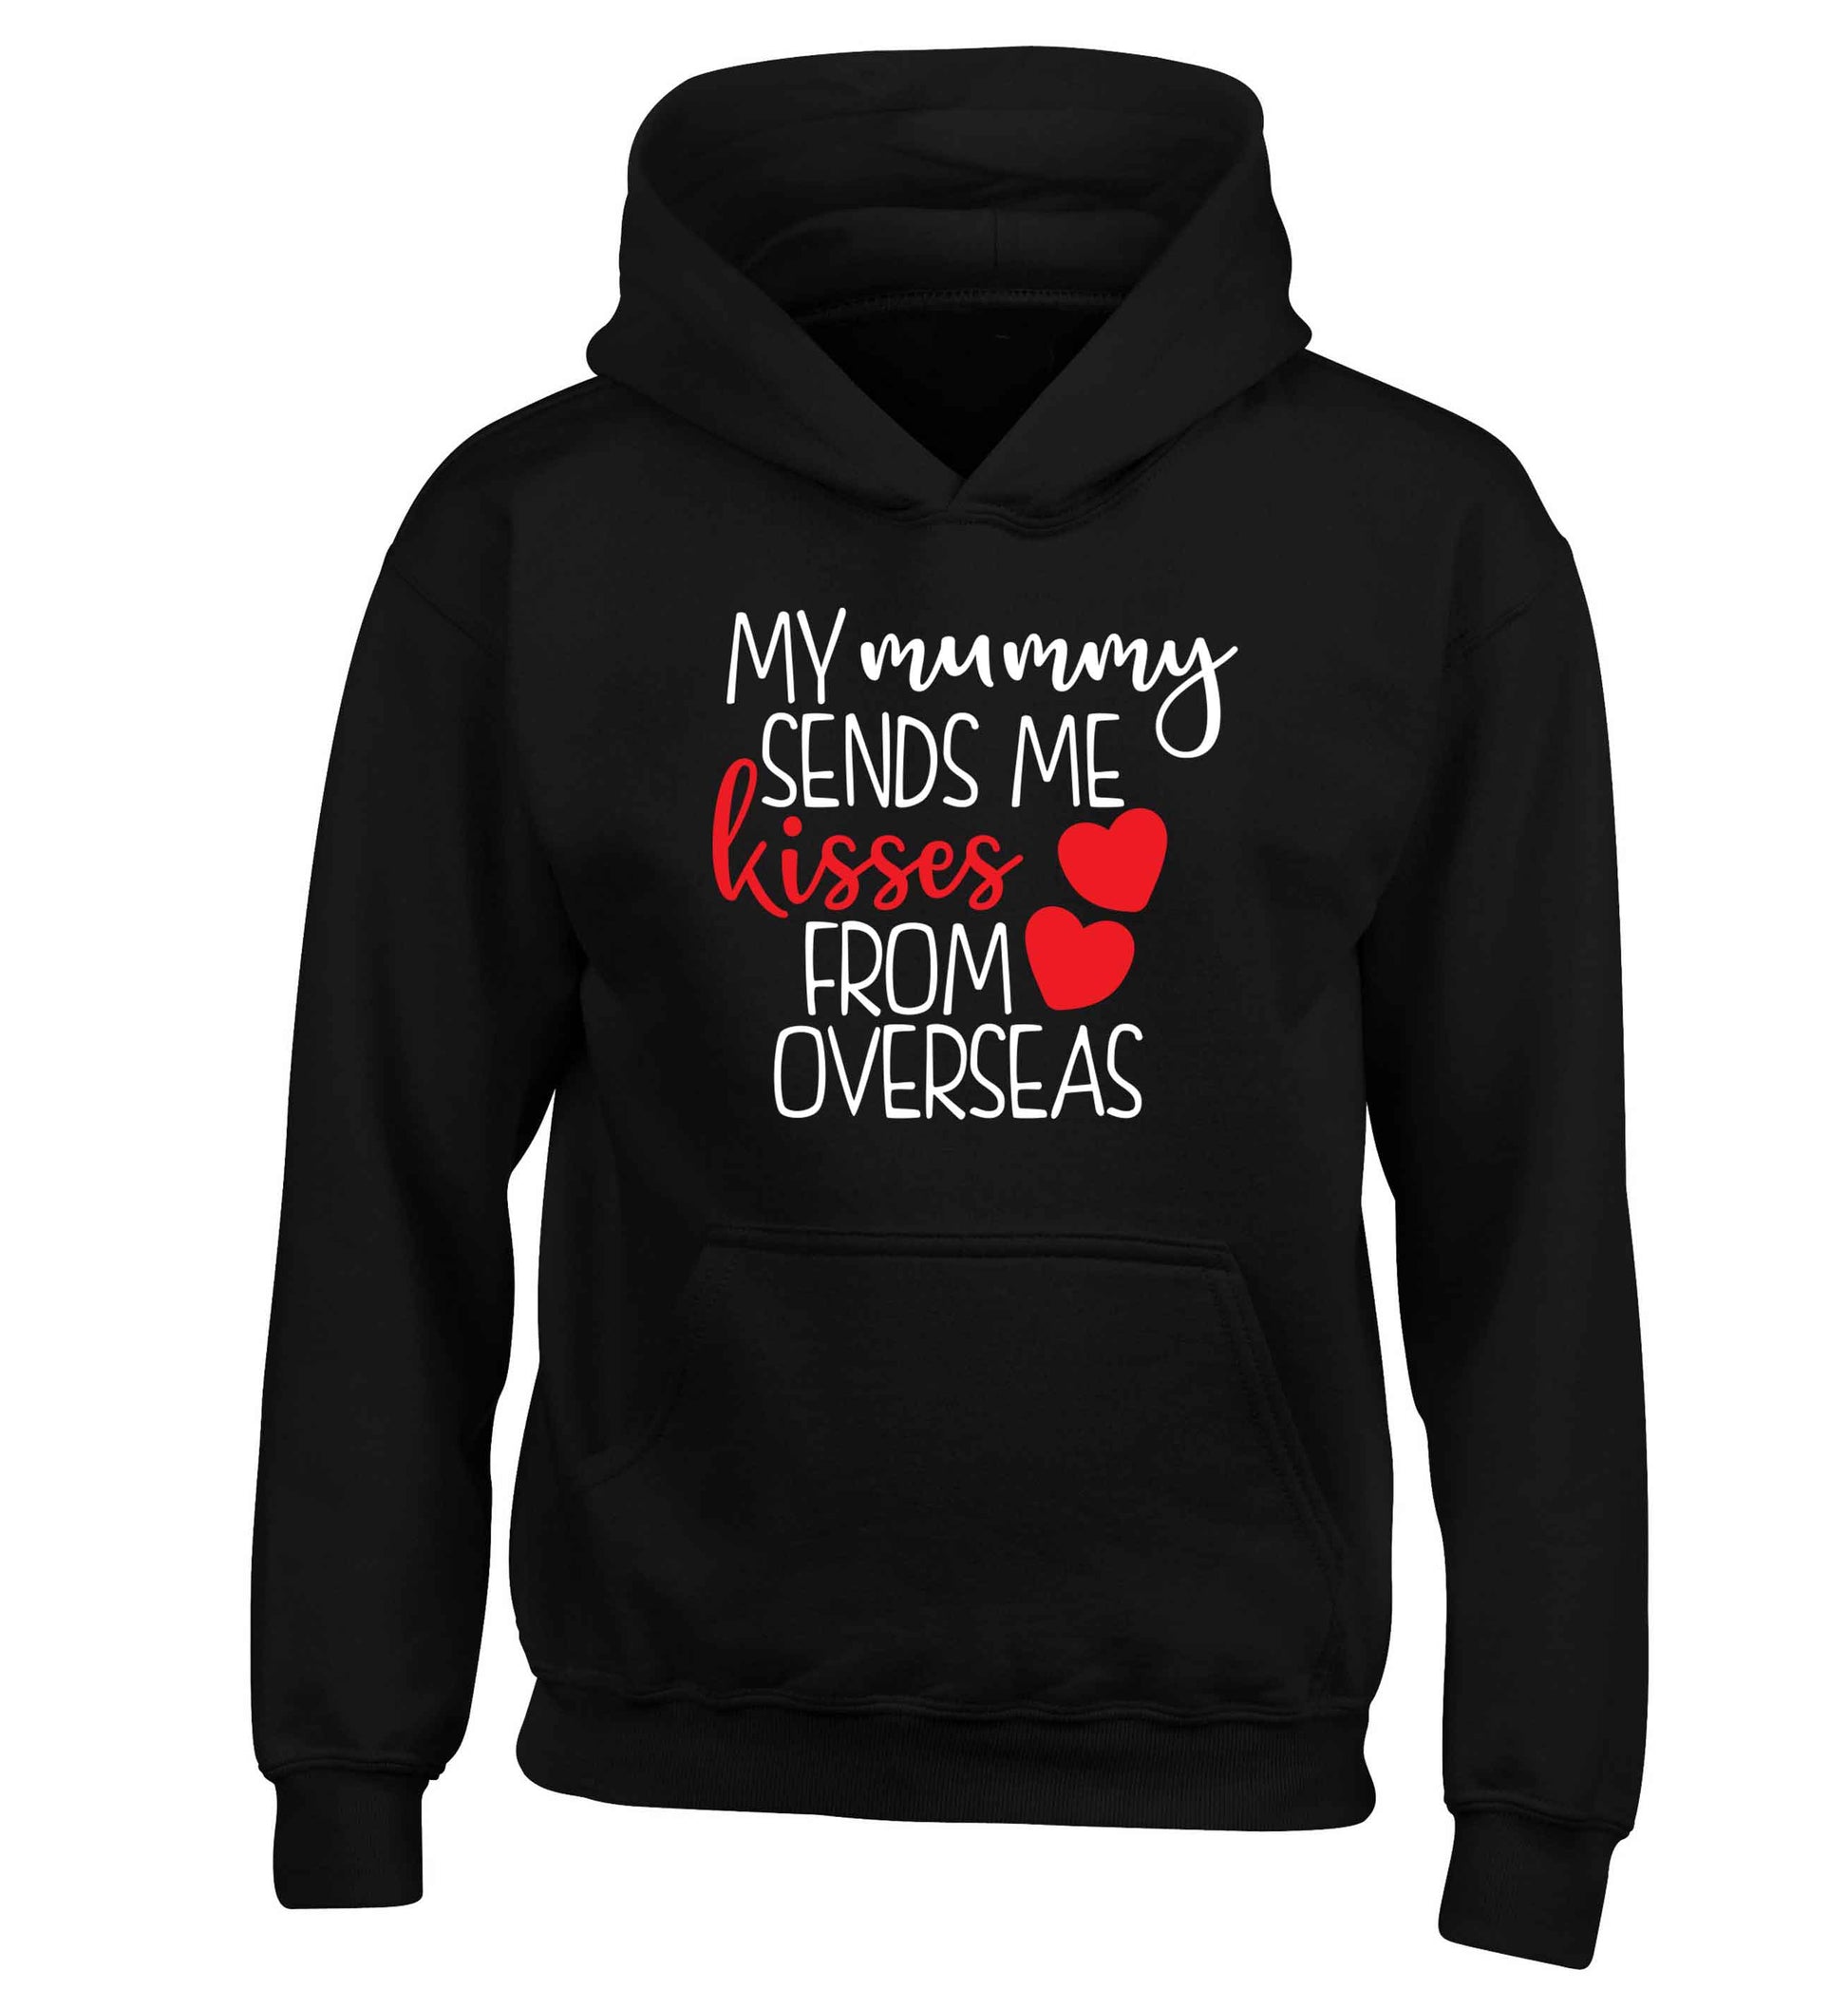 My mummy sends me kisses from overseas children's black hoodie 12-13 Years